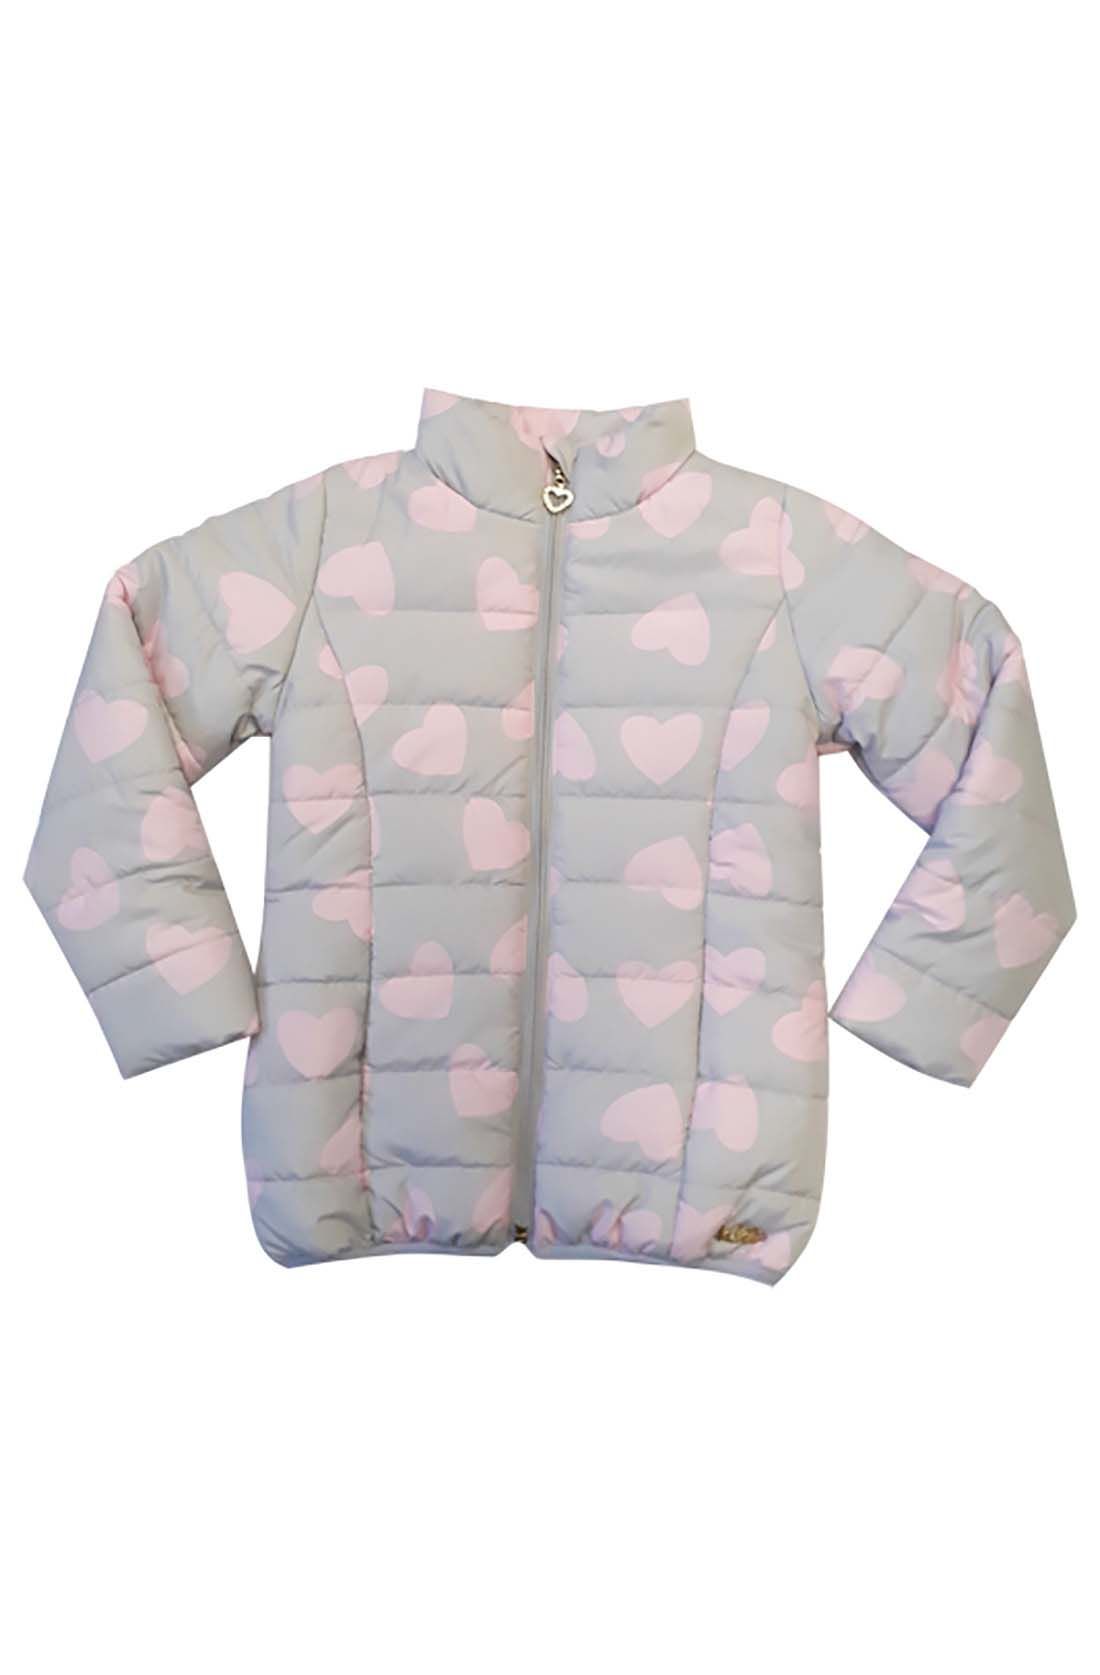 jaqueta infantil nylon